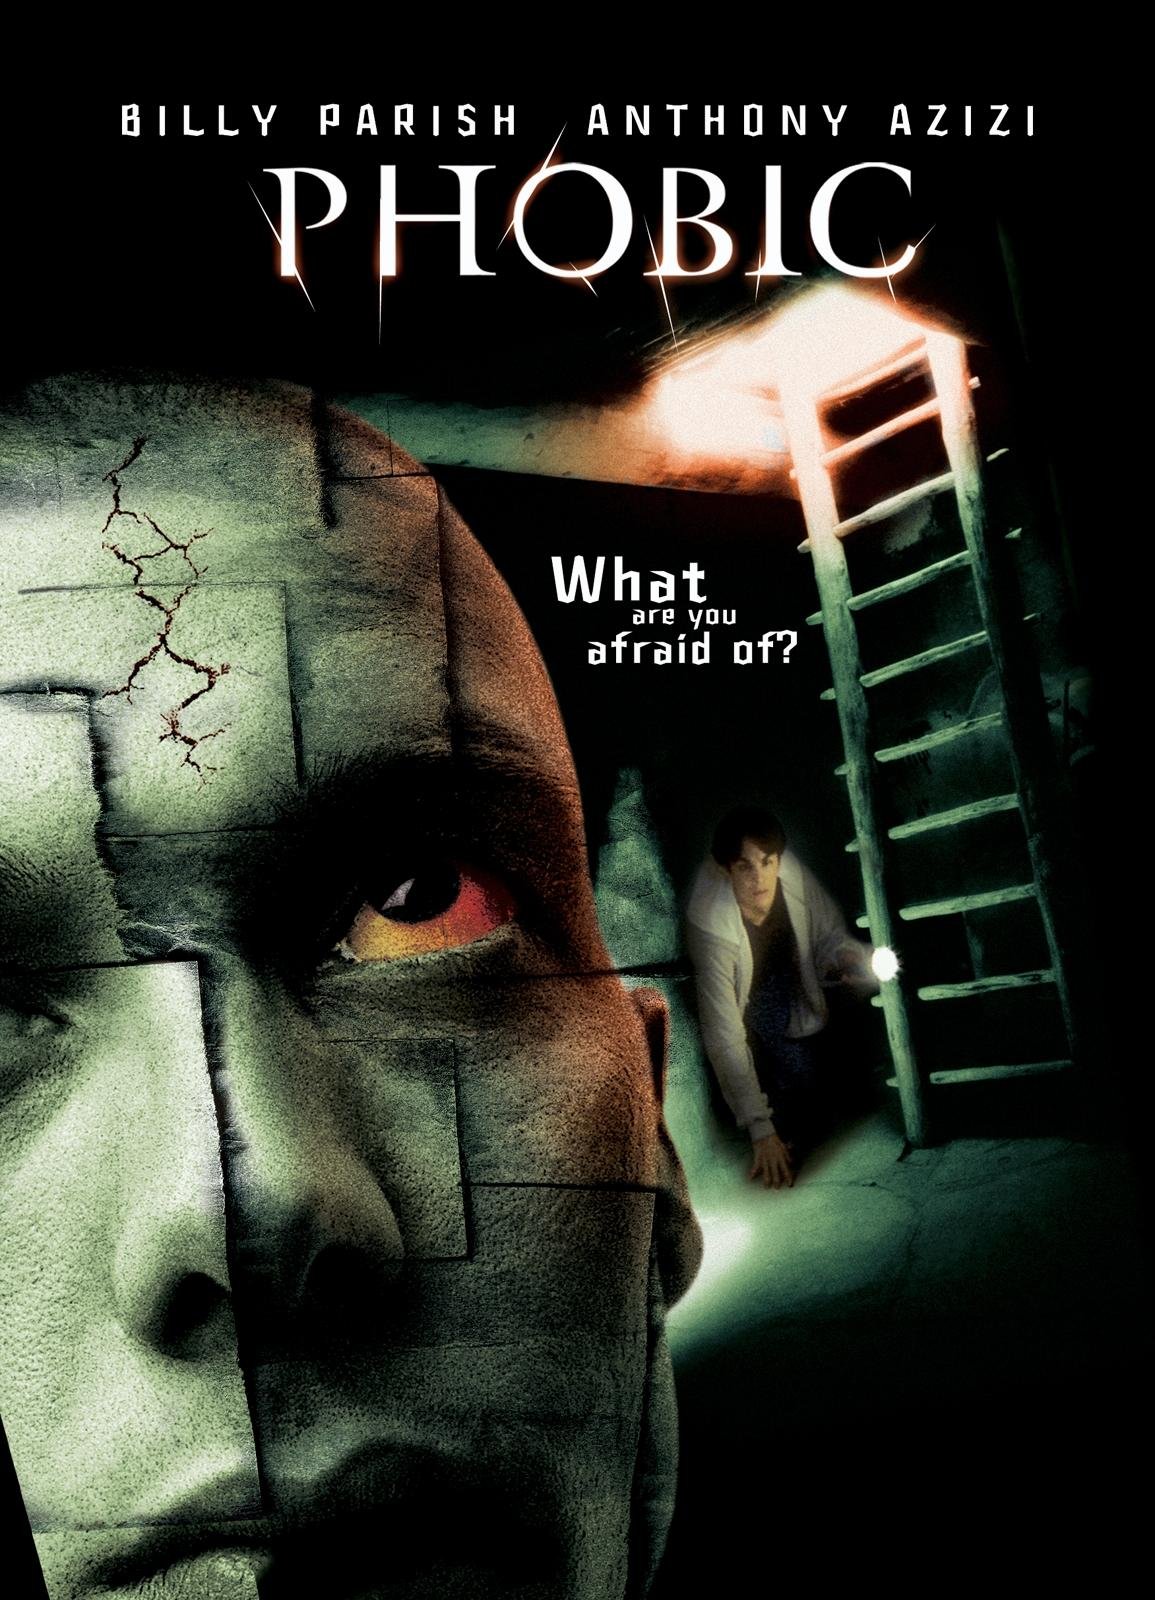 Phobic (2002) Screenshot 1 